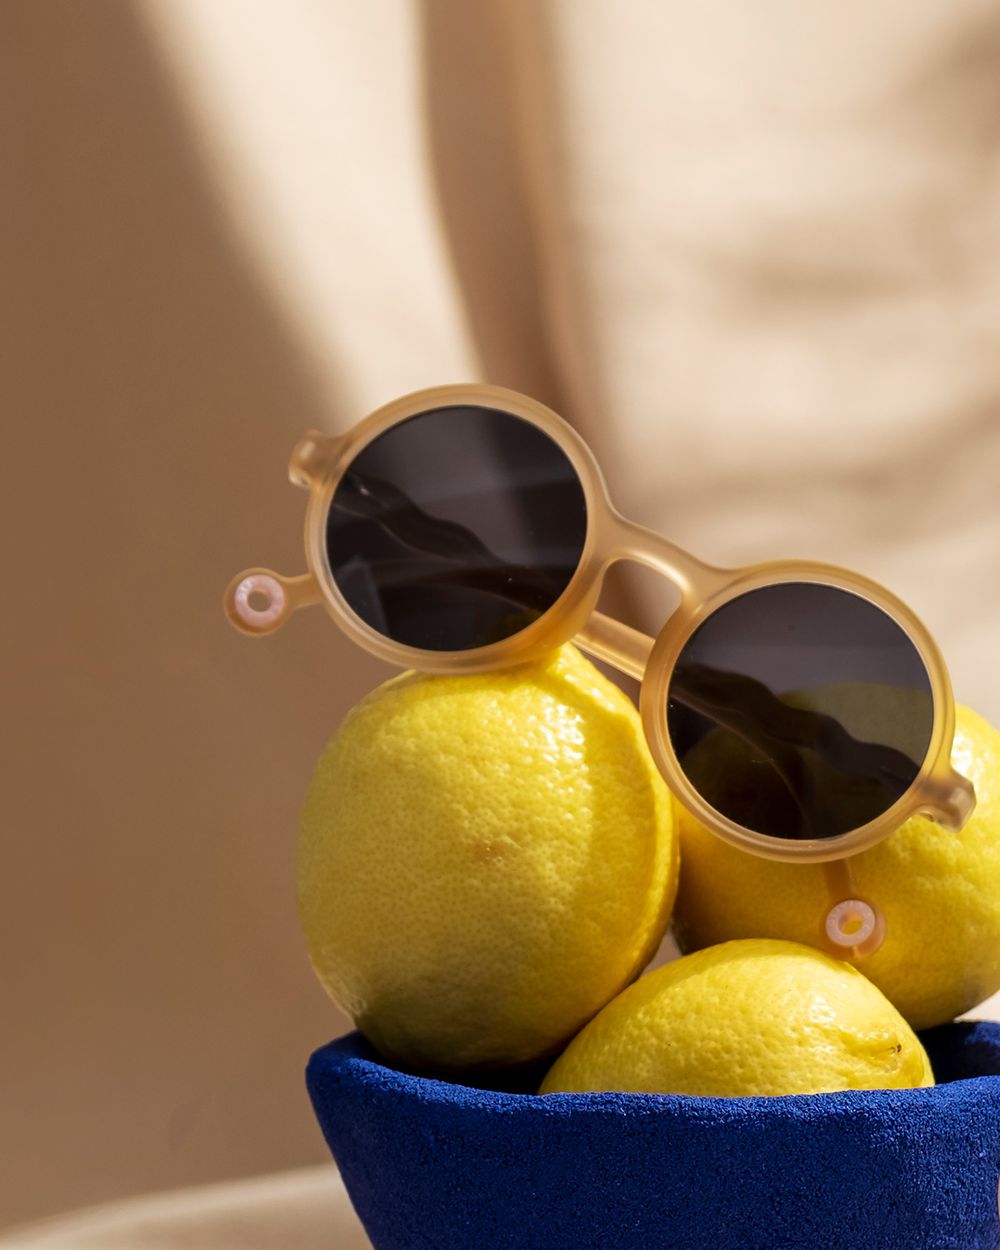 Junior Round Sunglasses Sand Beige with Polarized Lenses